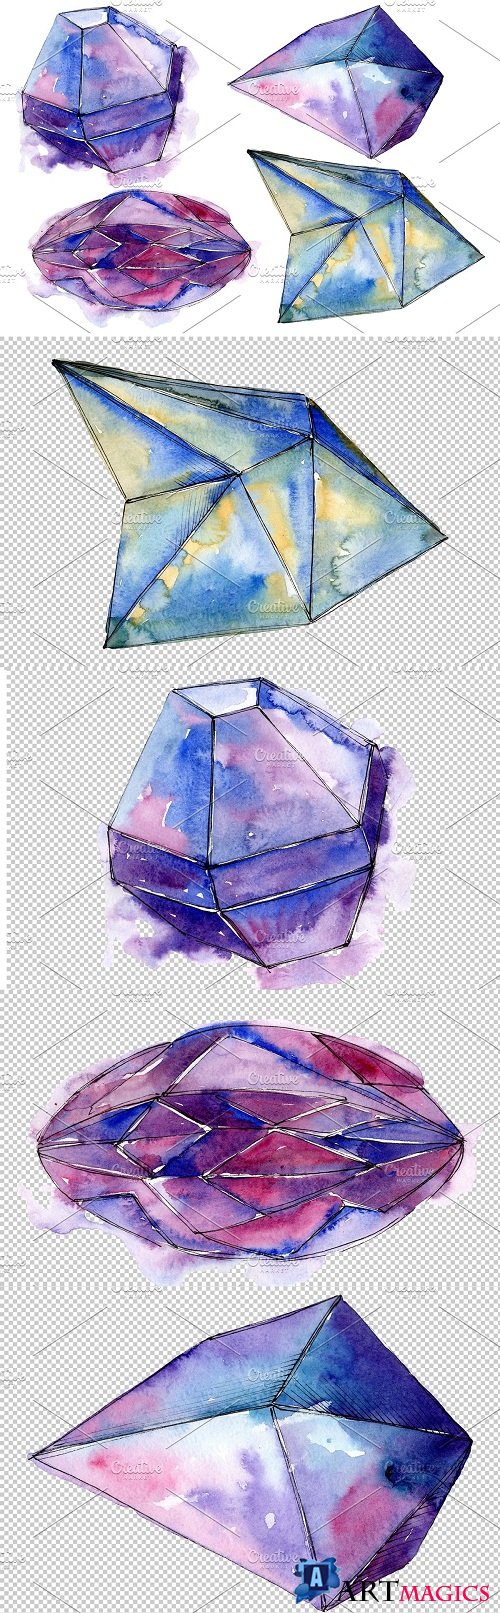 Violet crystals Watercolor png - 3539253